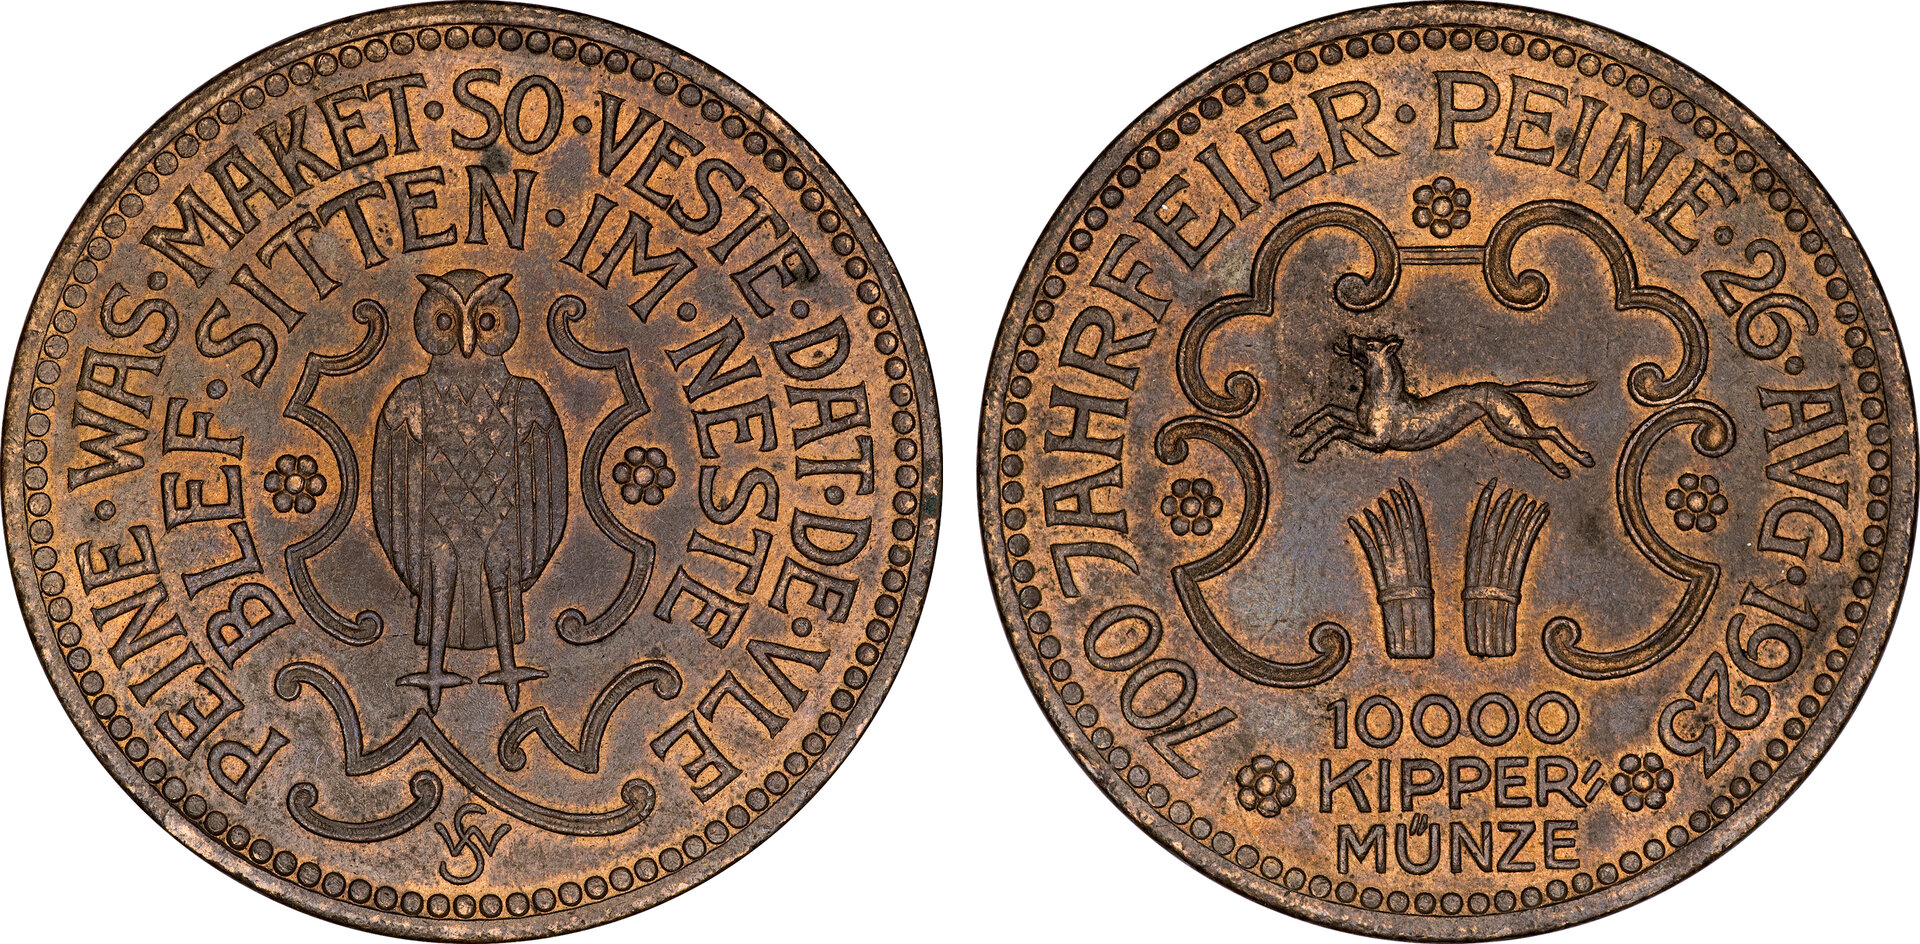 Germany (Hannover - Peine) Notgeld - 1923 10000 Kippermunze.jpg